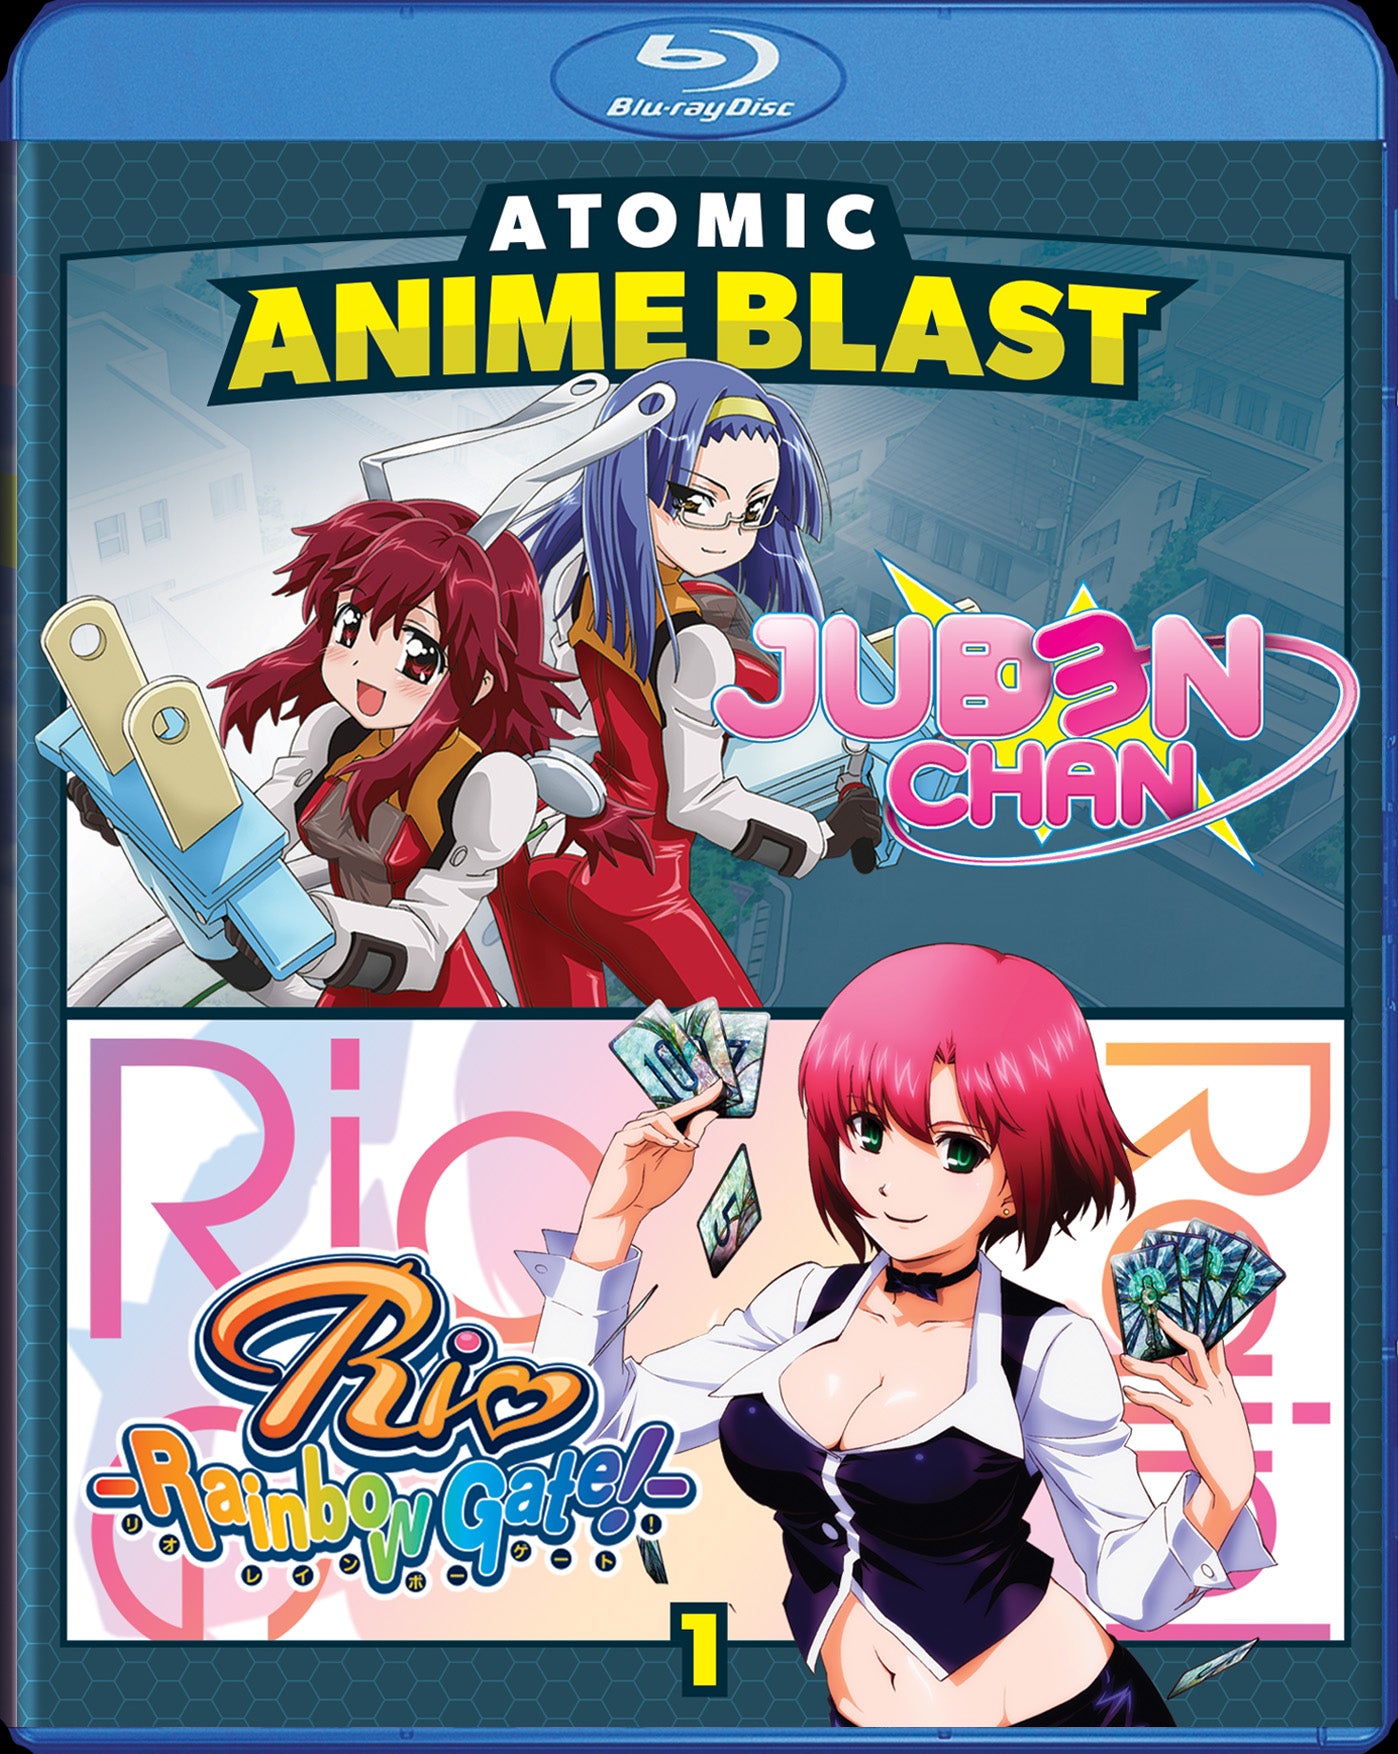 Atomic Anime Blast V1(Juden Chan/Rio Rainbow) [BD]